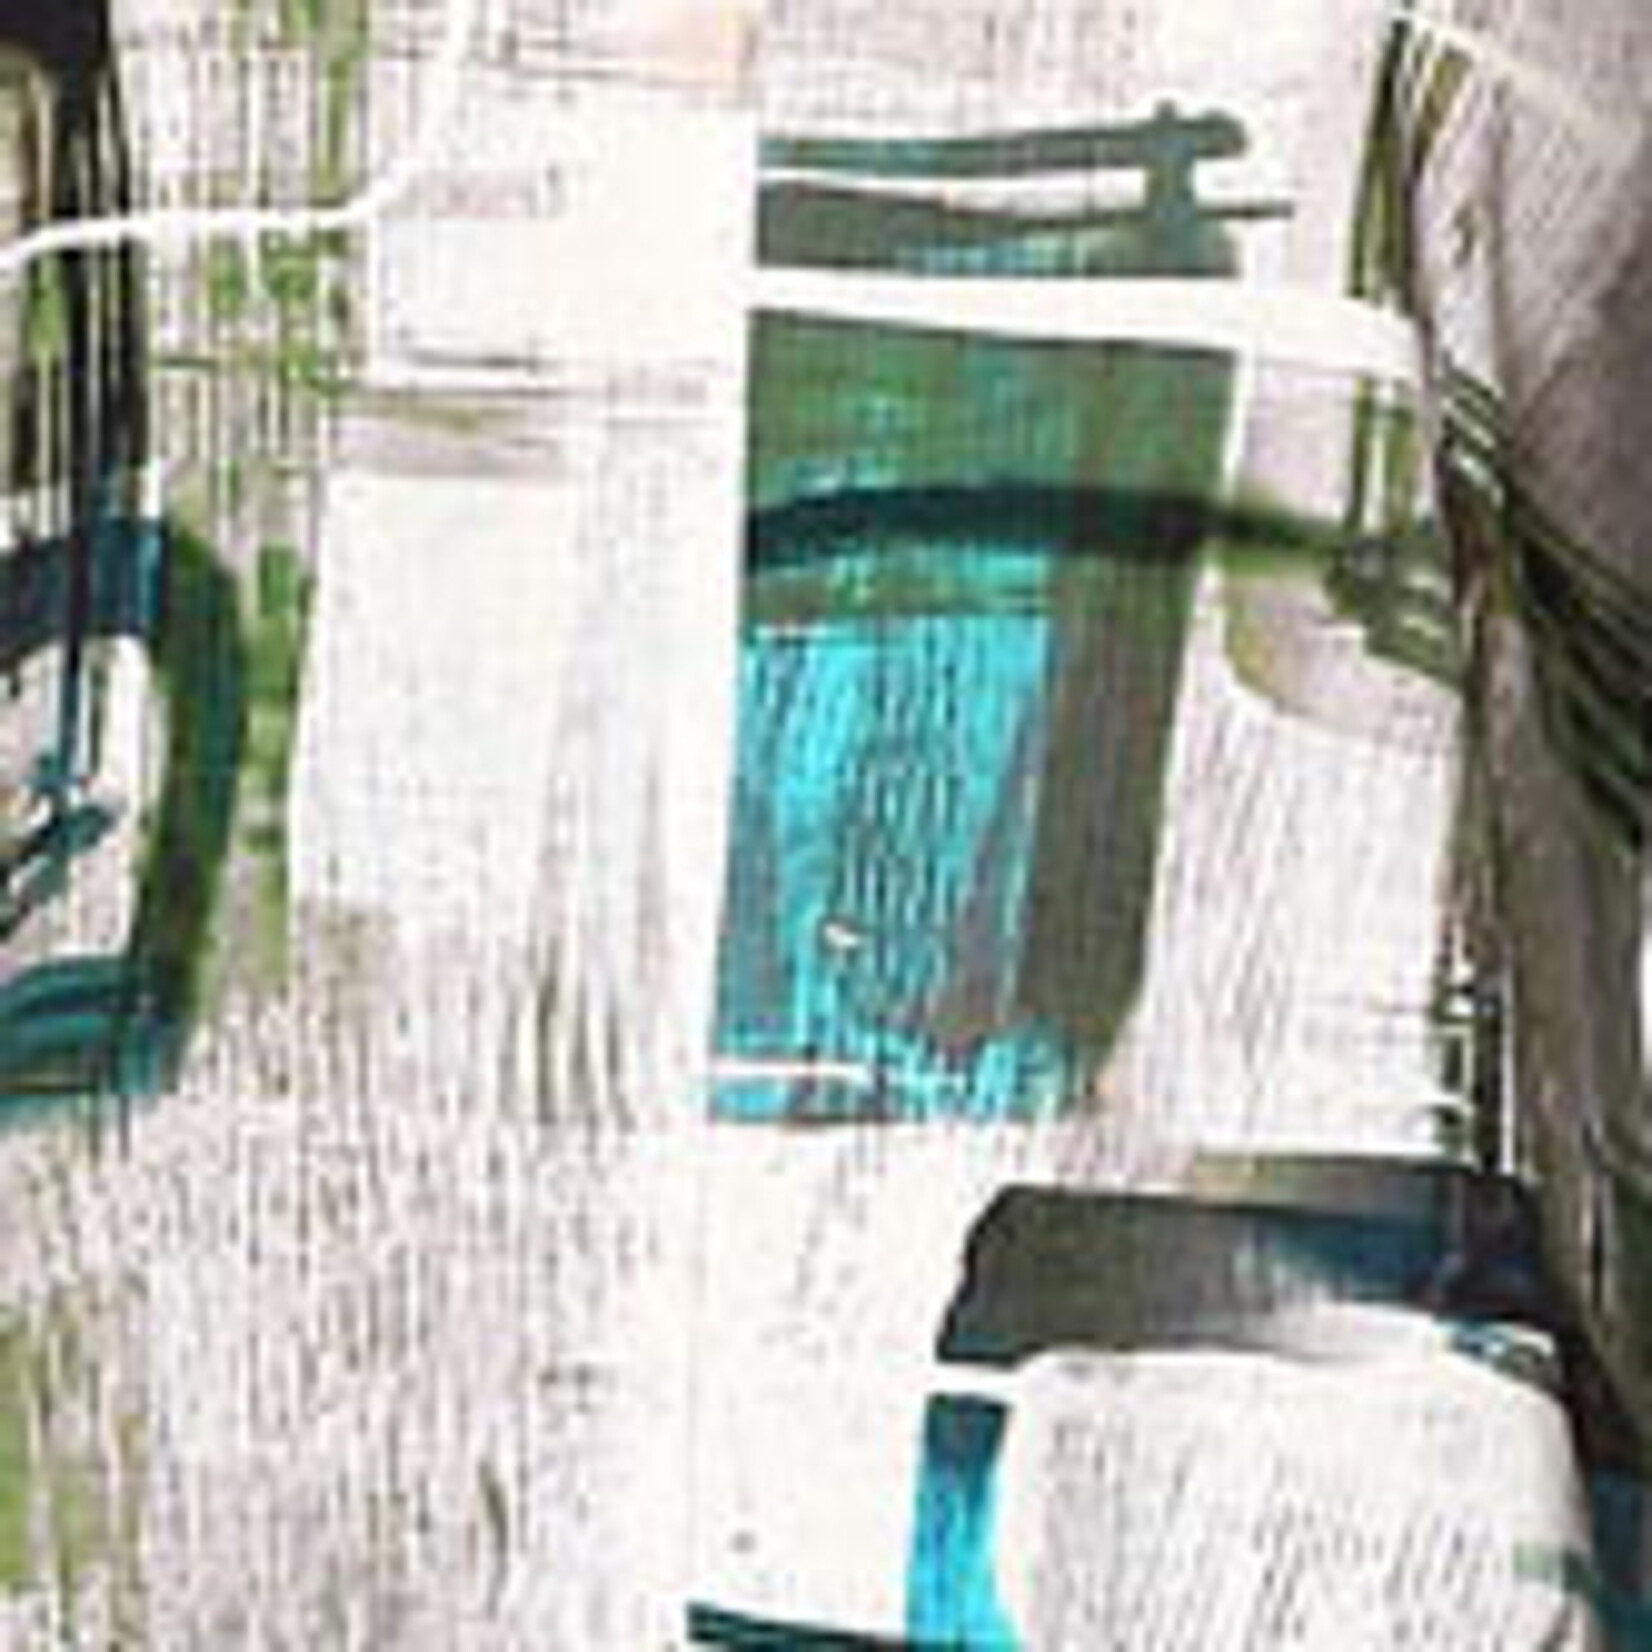 Parsley and Sage Blue & Green Geometric Print 3/4 Sleeve Shirt